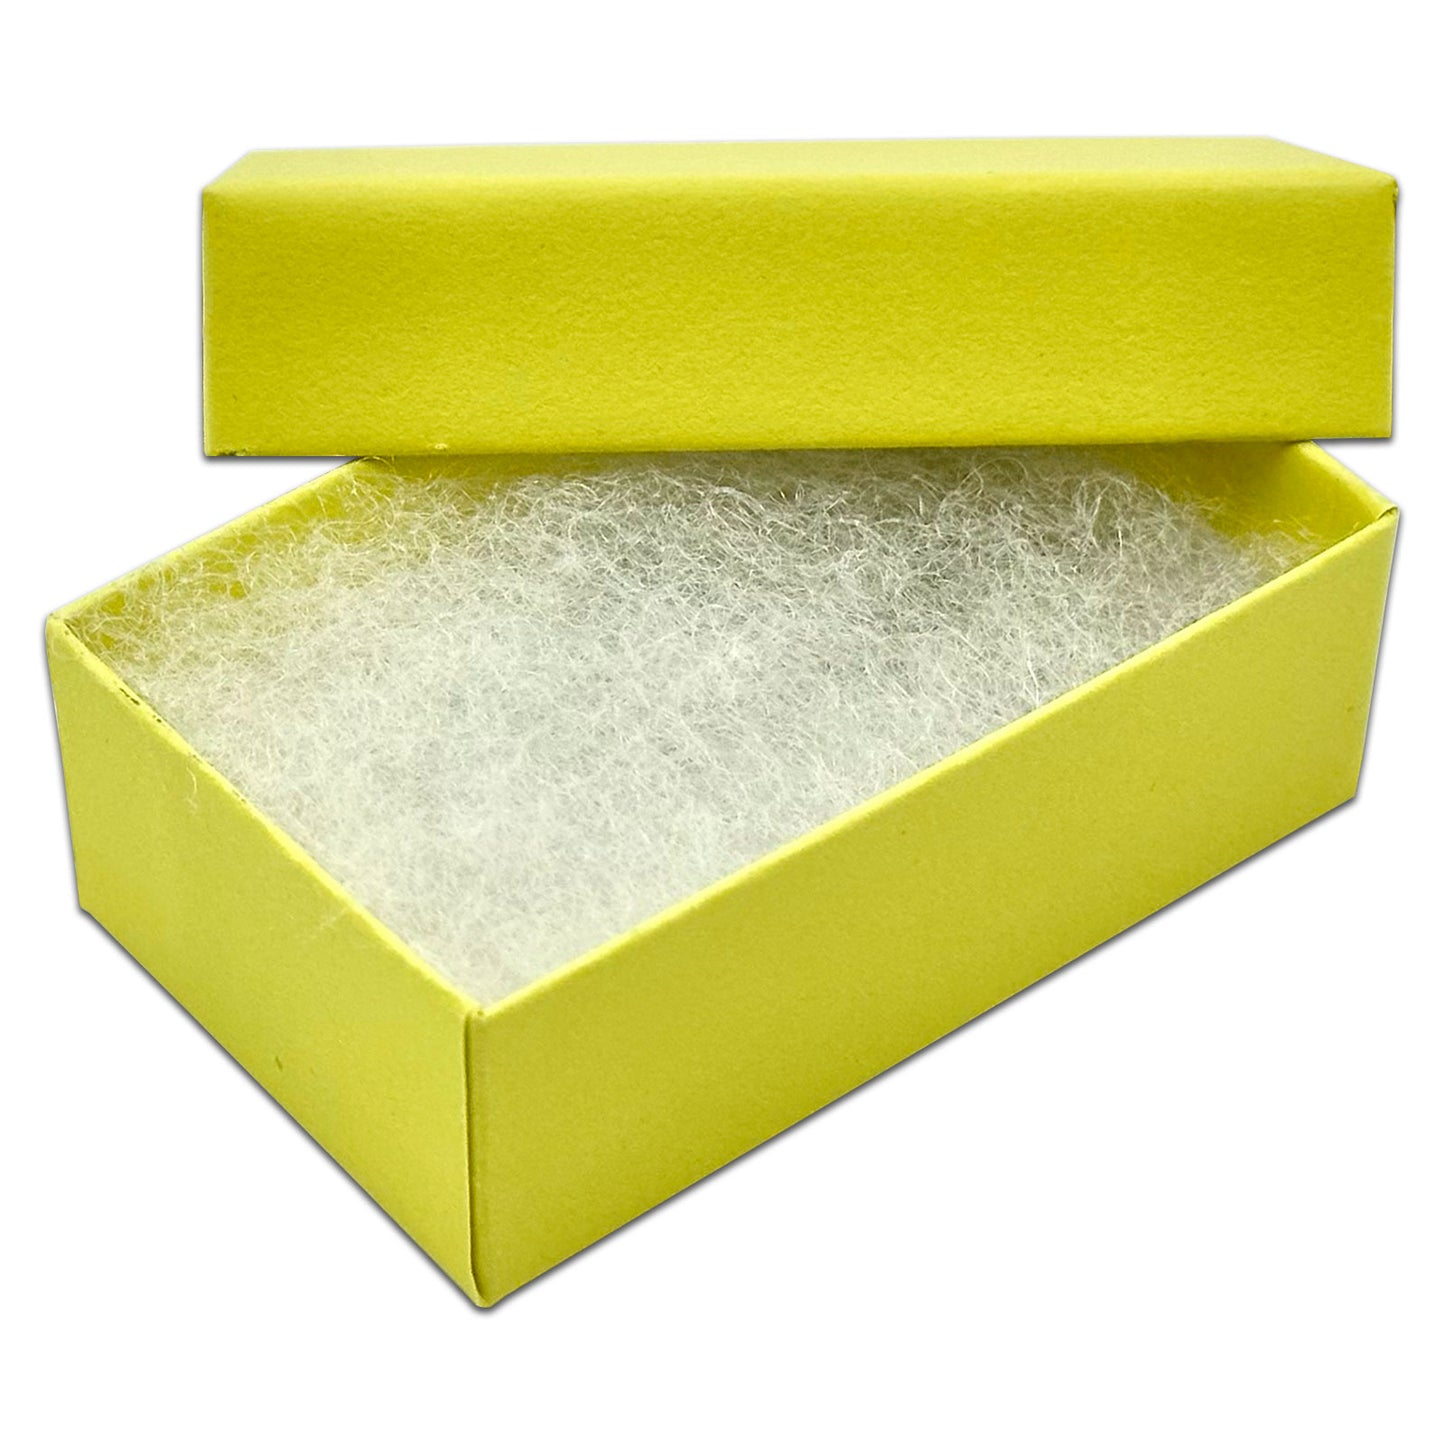 2 5/8" x 1 5/8" x 1" Mustard Yellow Cotton Filled Paper Box